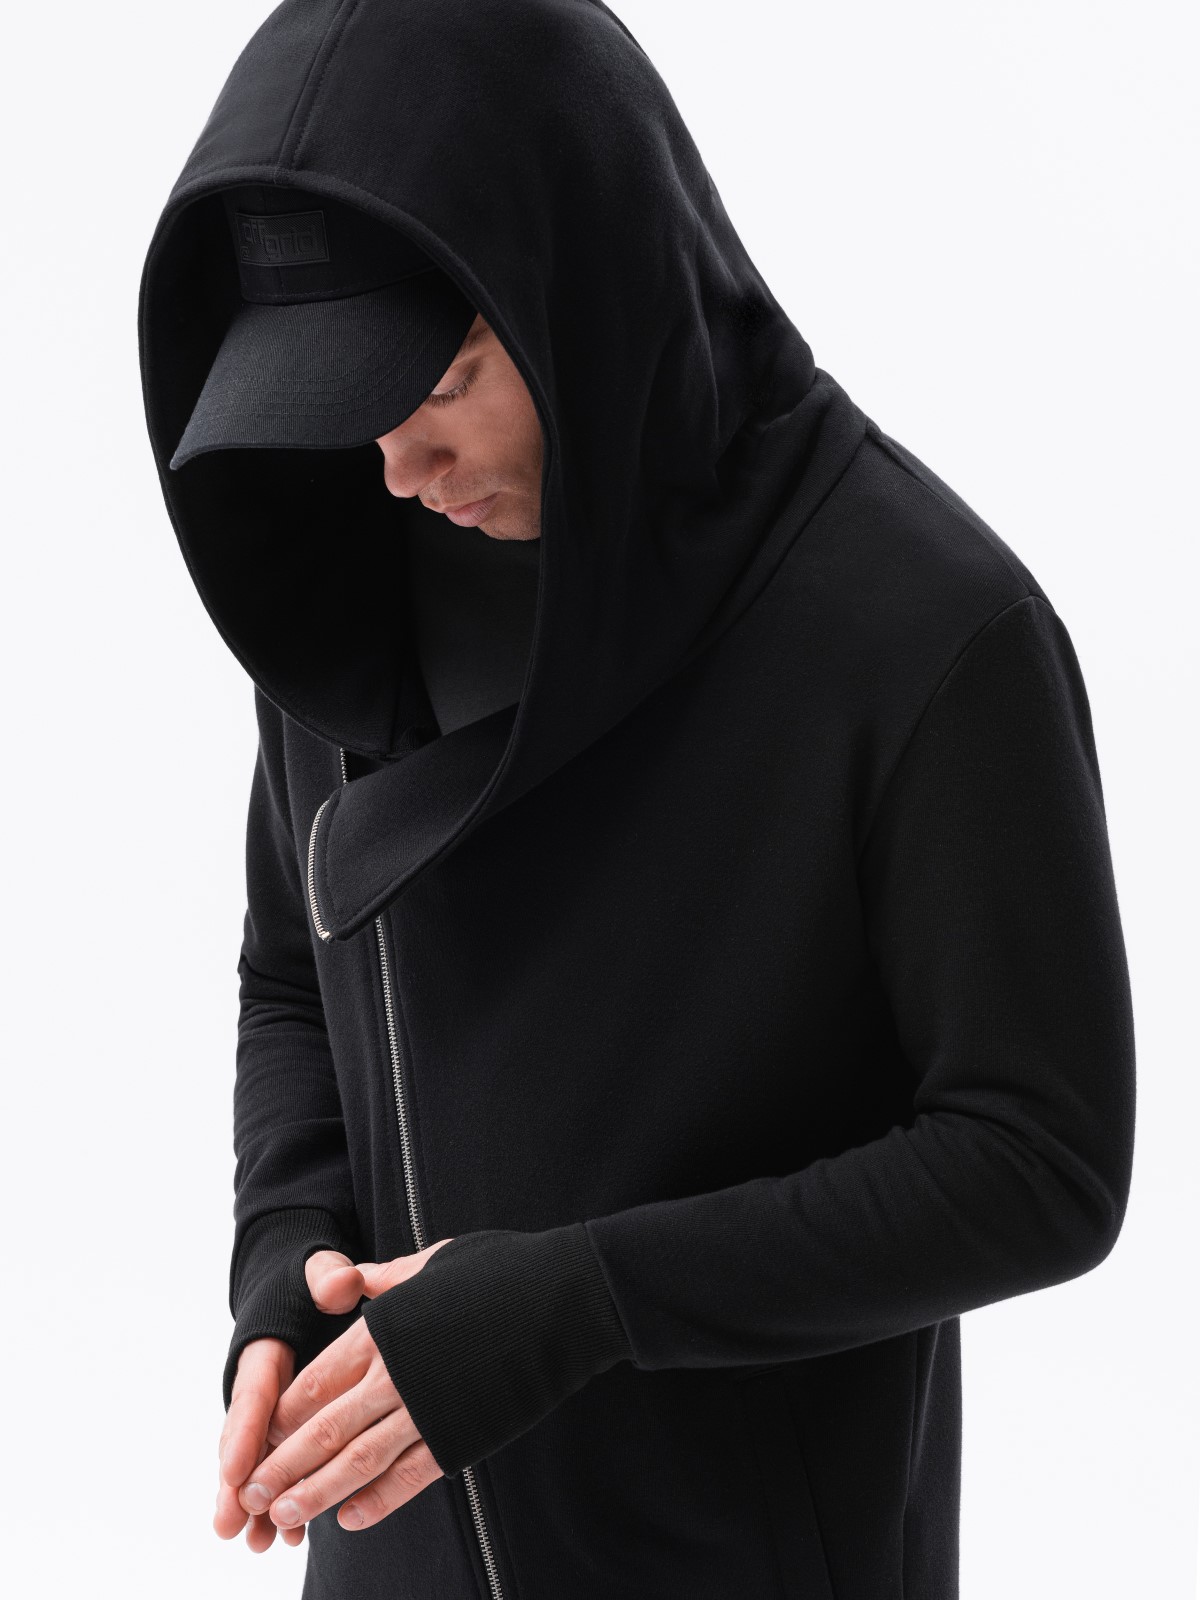 Bluza męska z kapturem rozpinana Nantes B1368 - czarna - M Ombre Clothing